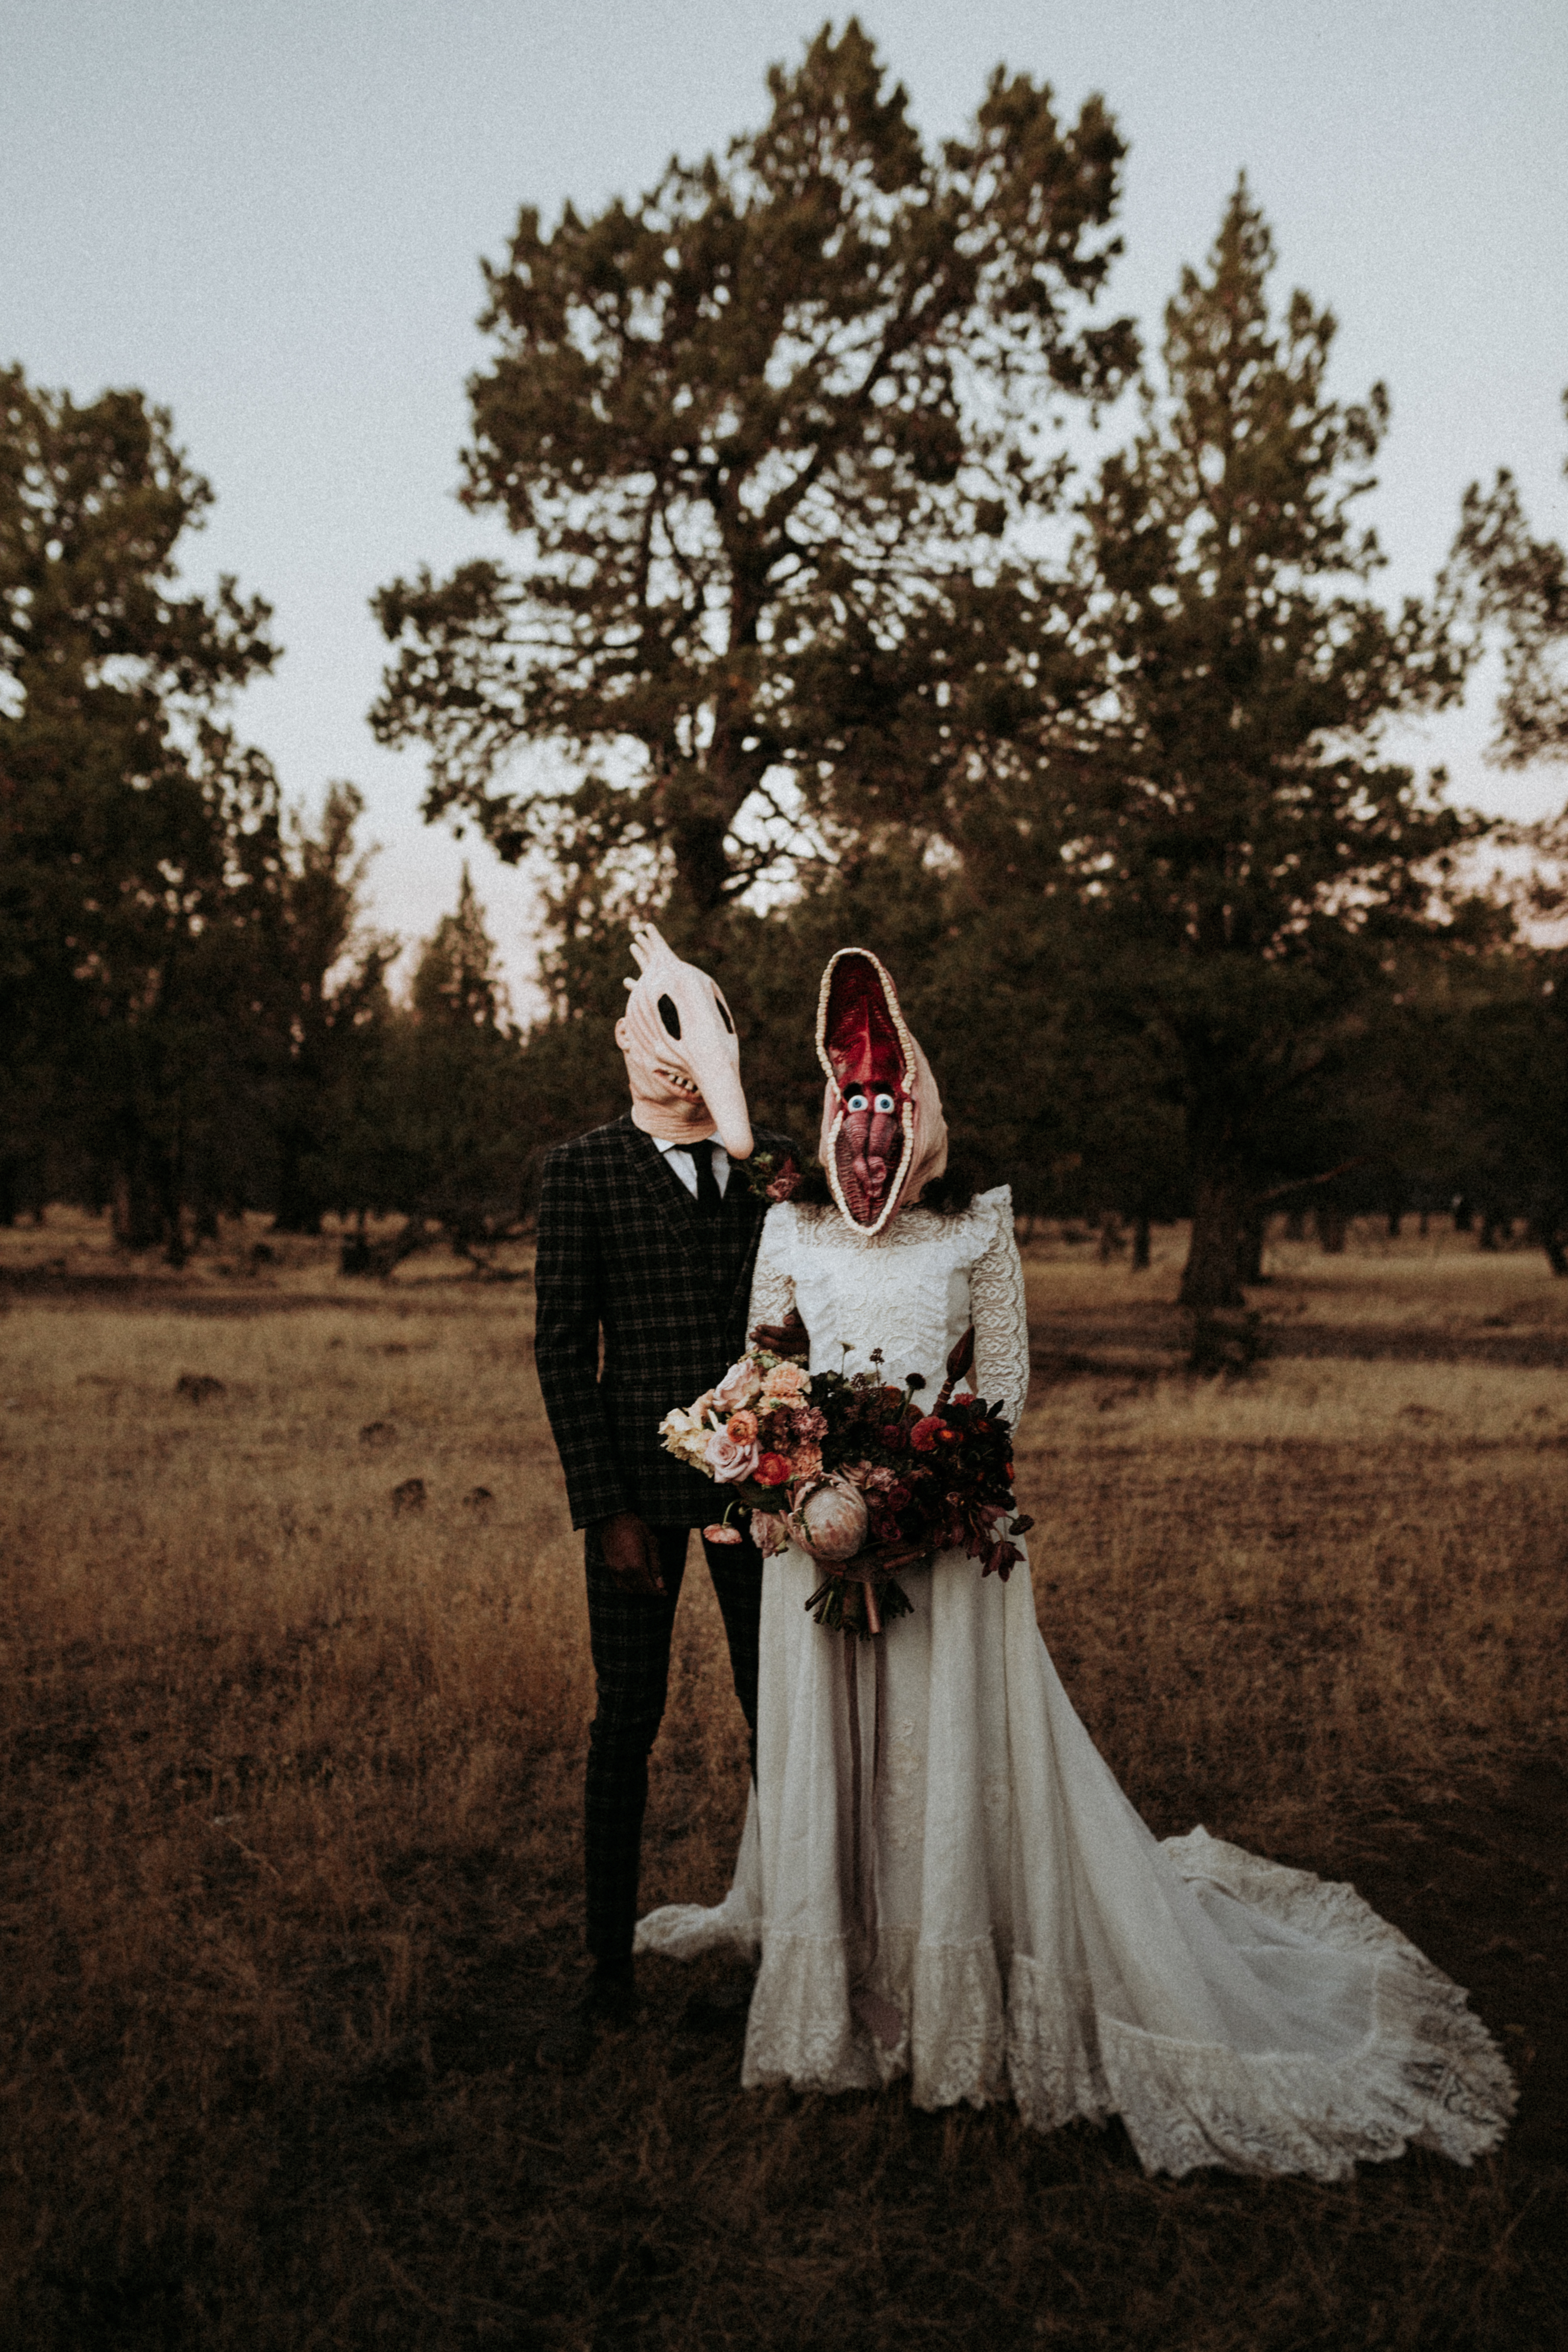 Spooky Halloween ideas for your wedding